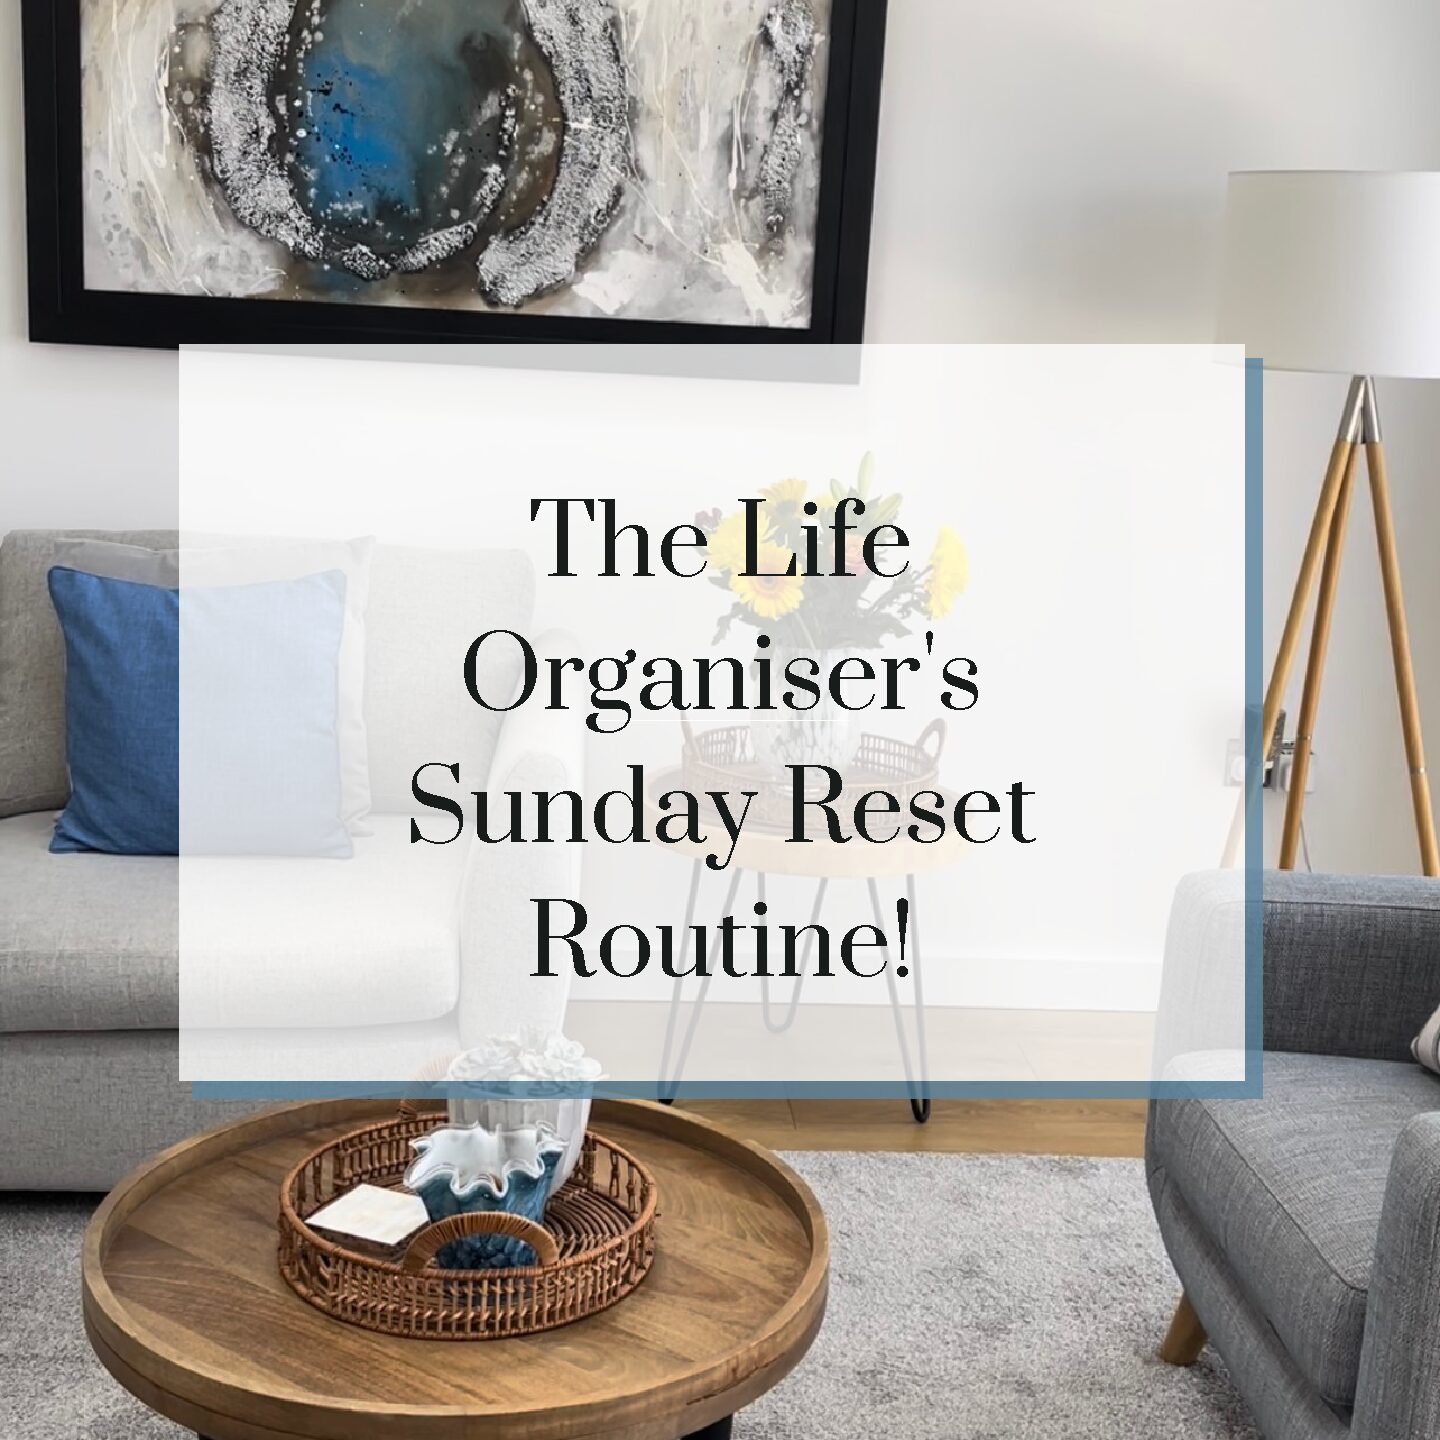 The Life Organiser’s Sunday Reset Routine!